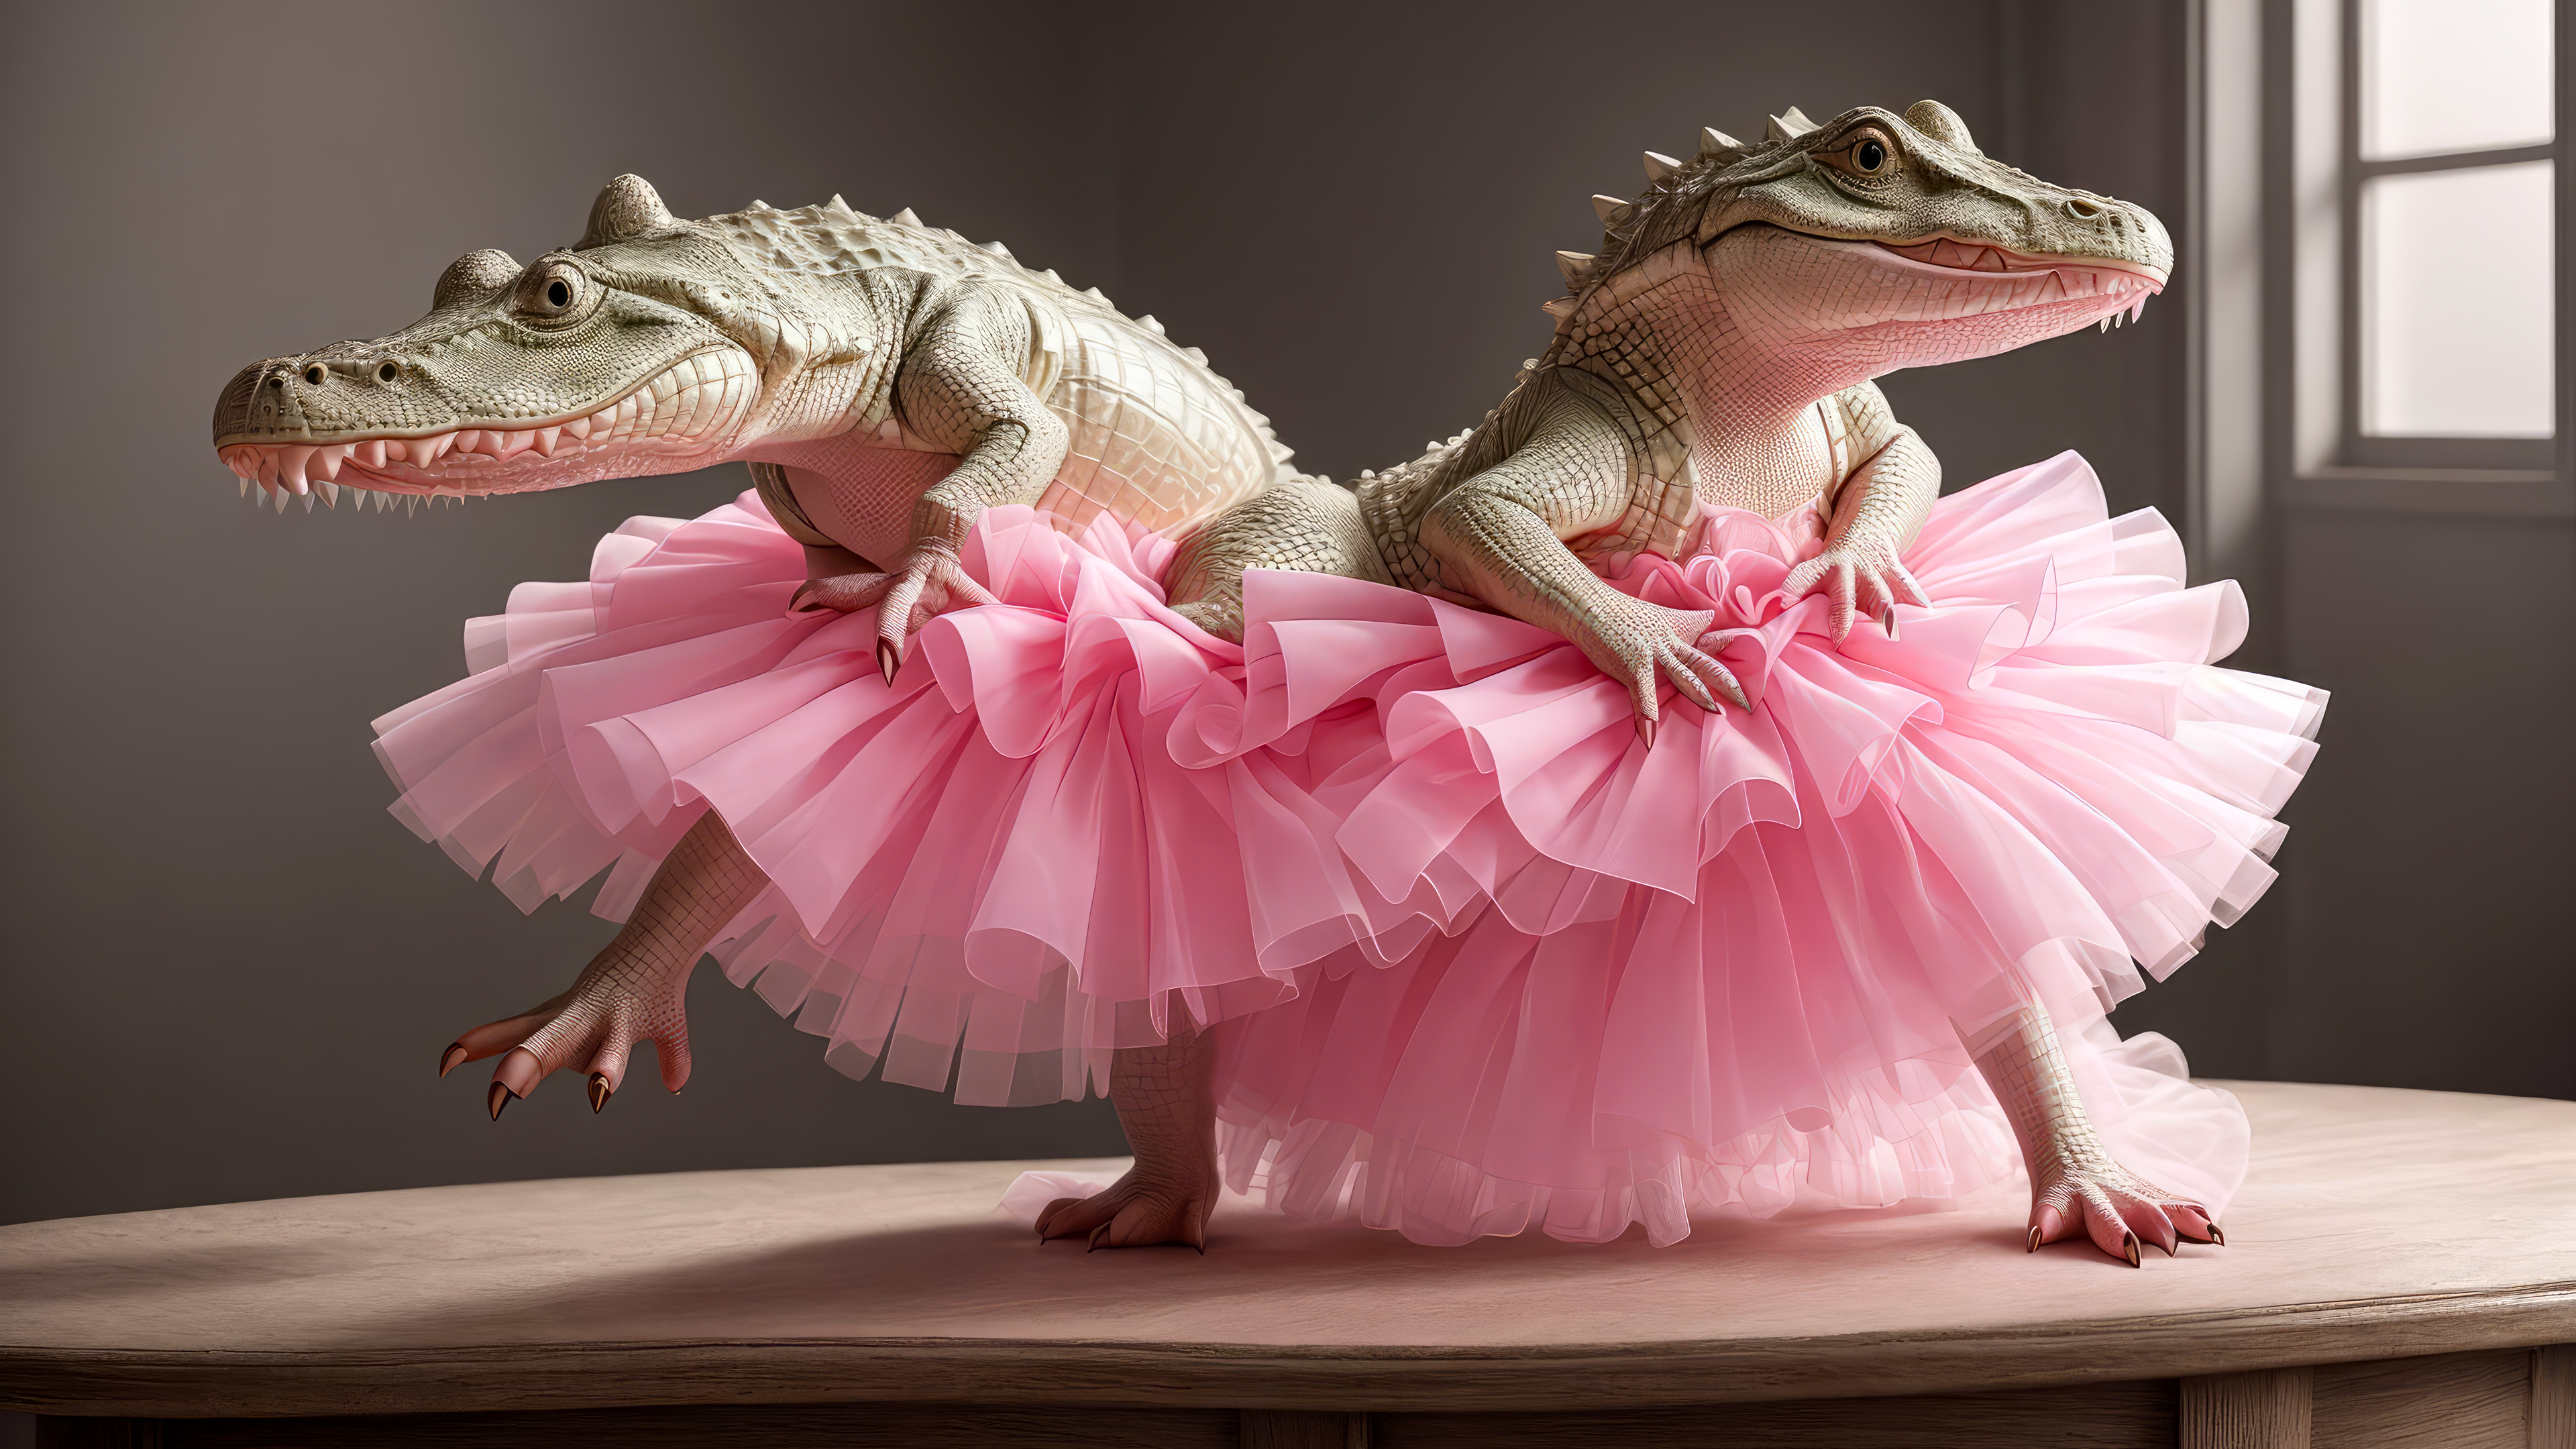 General 3840x2160 crocodiles pink tutu dancing humor teeth scaly AI art digital art skirt frills animals indoors claws table window